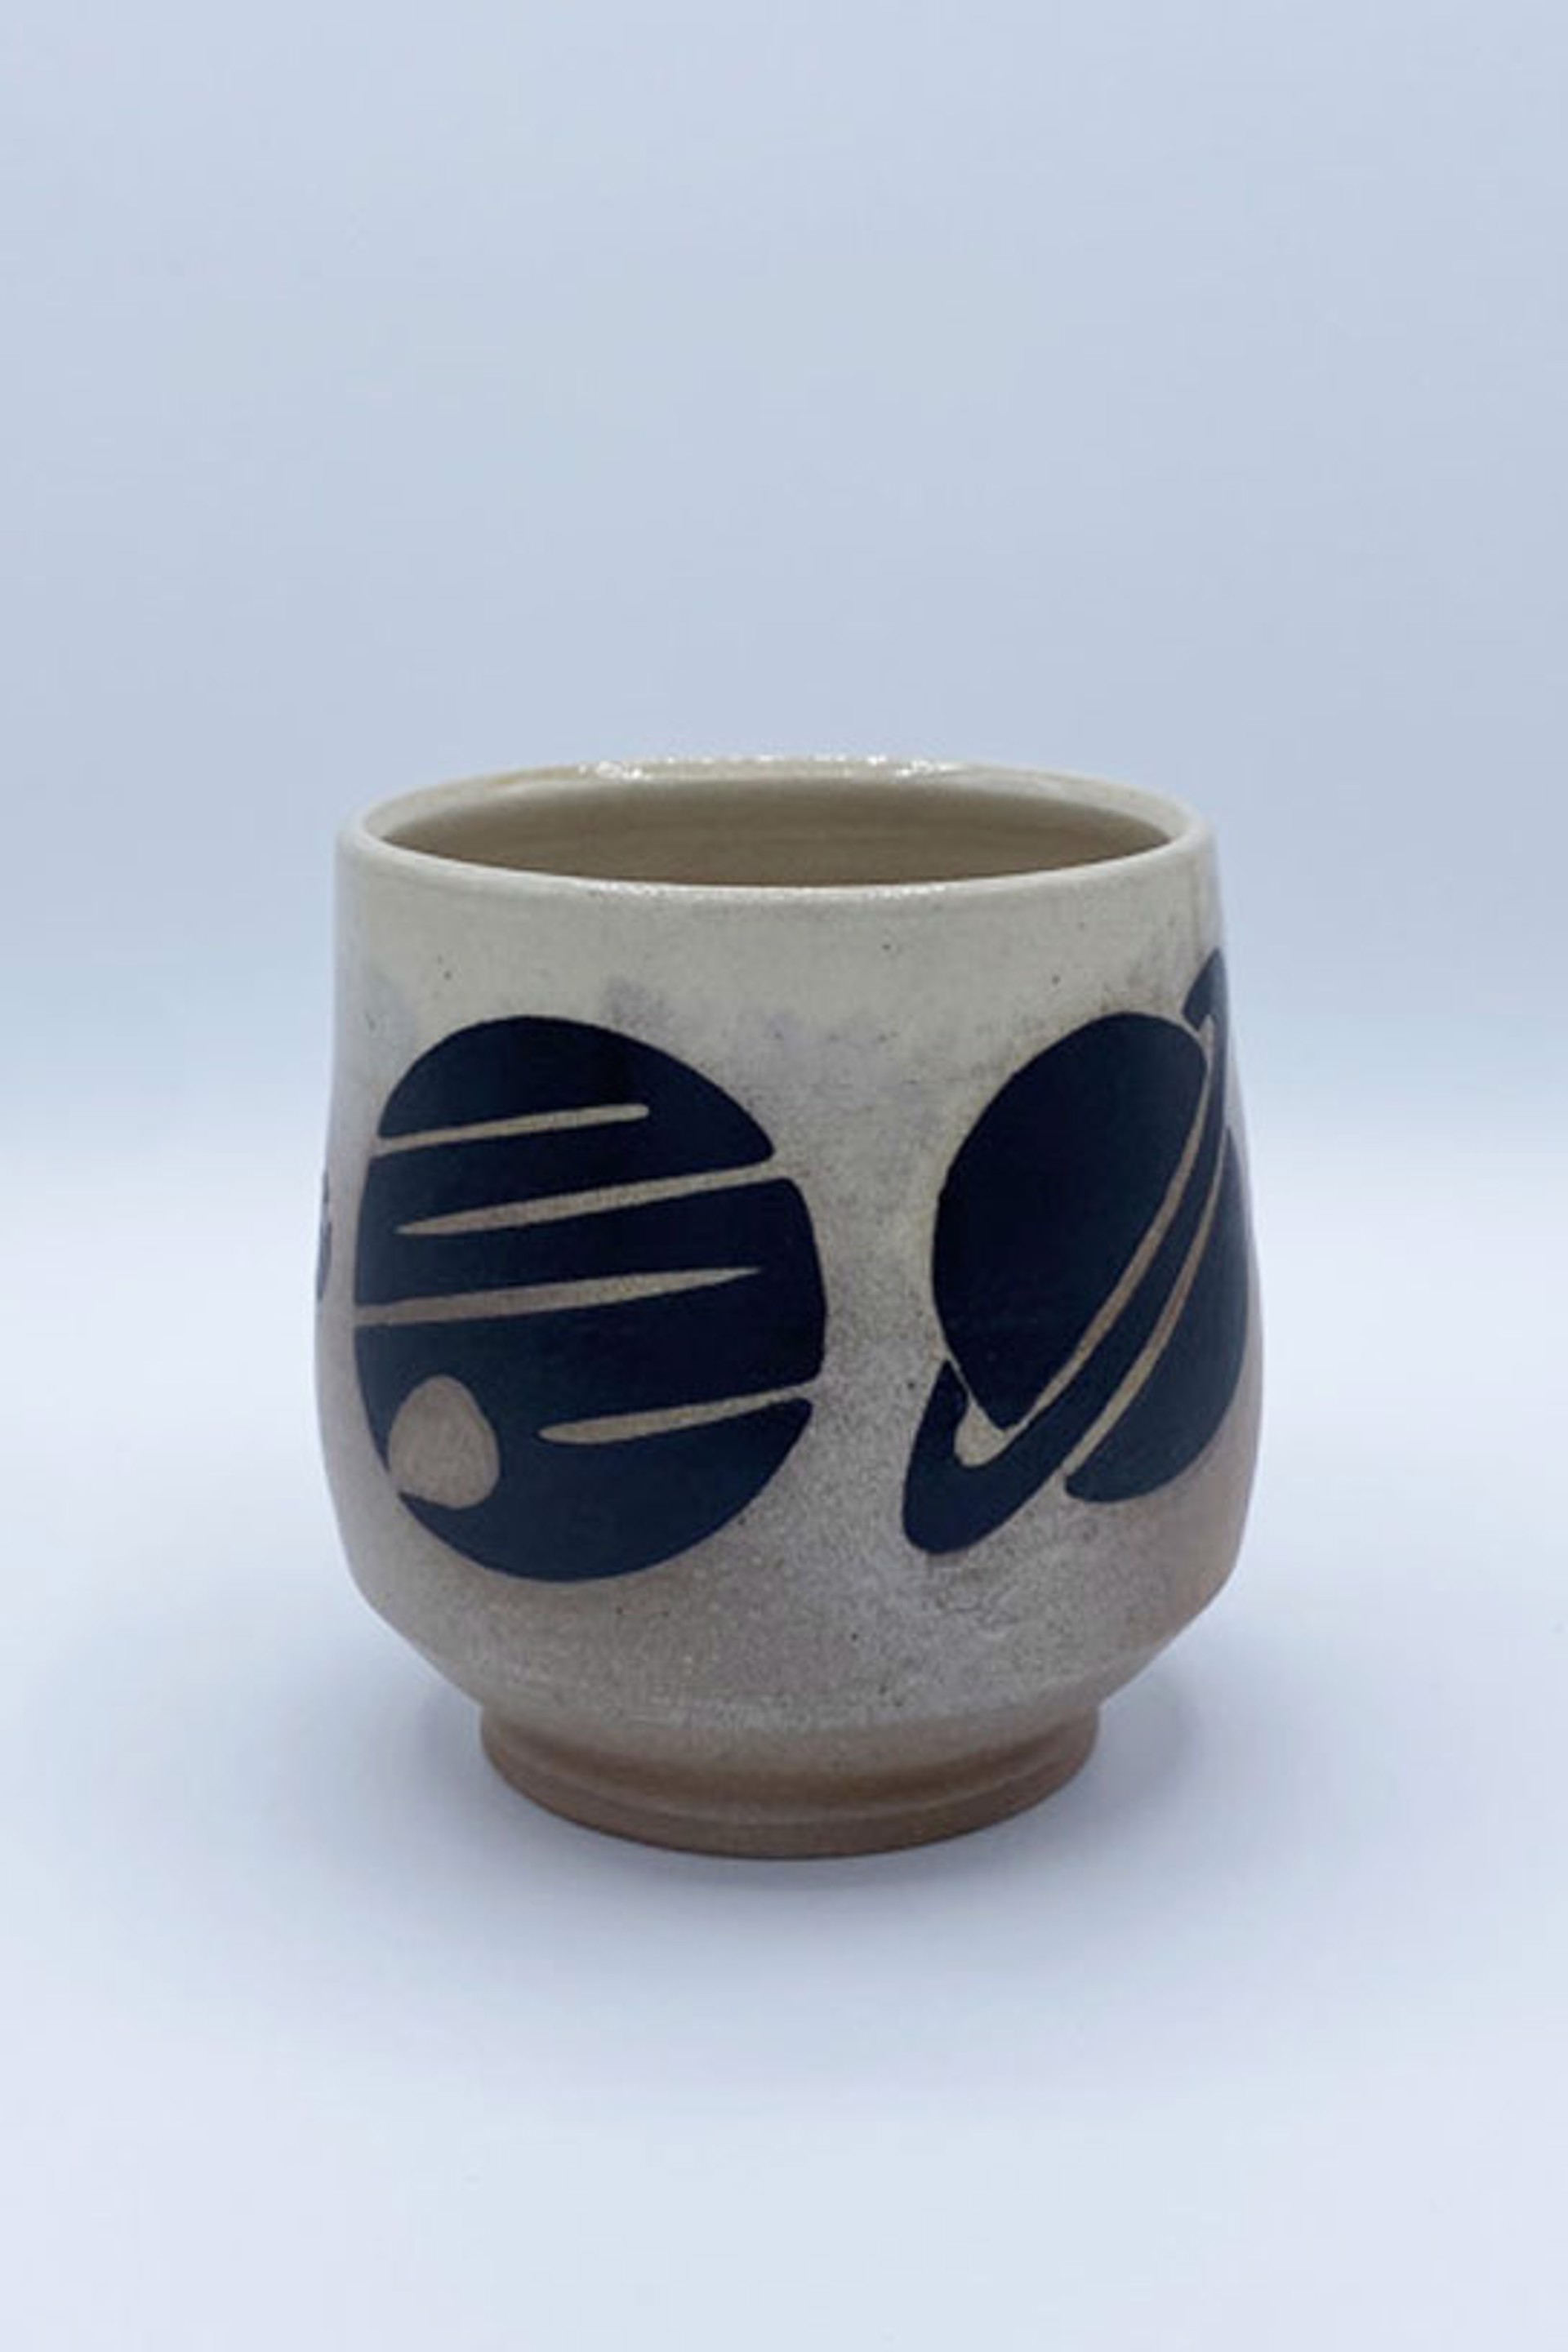 Planet Mug by Laura Cooke